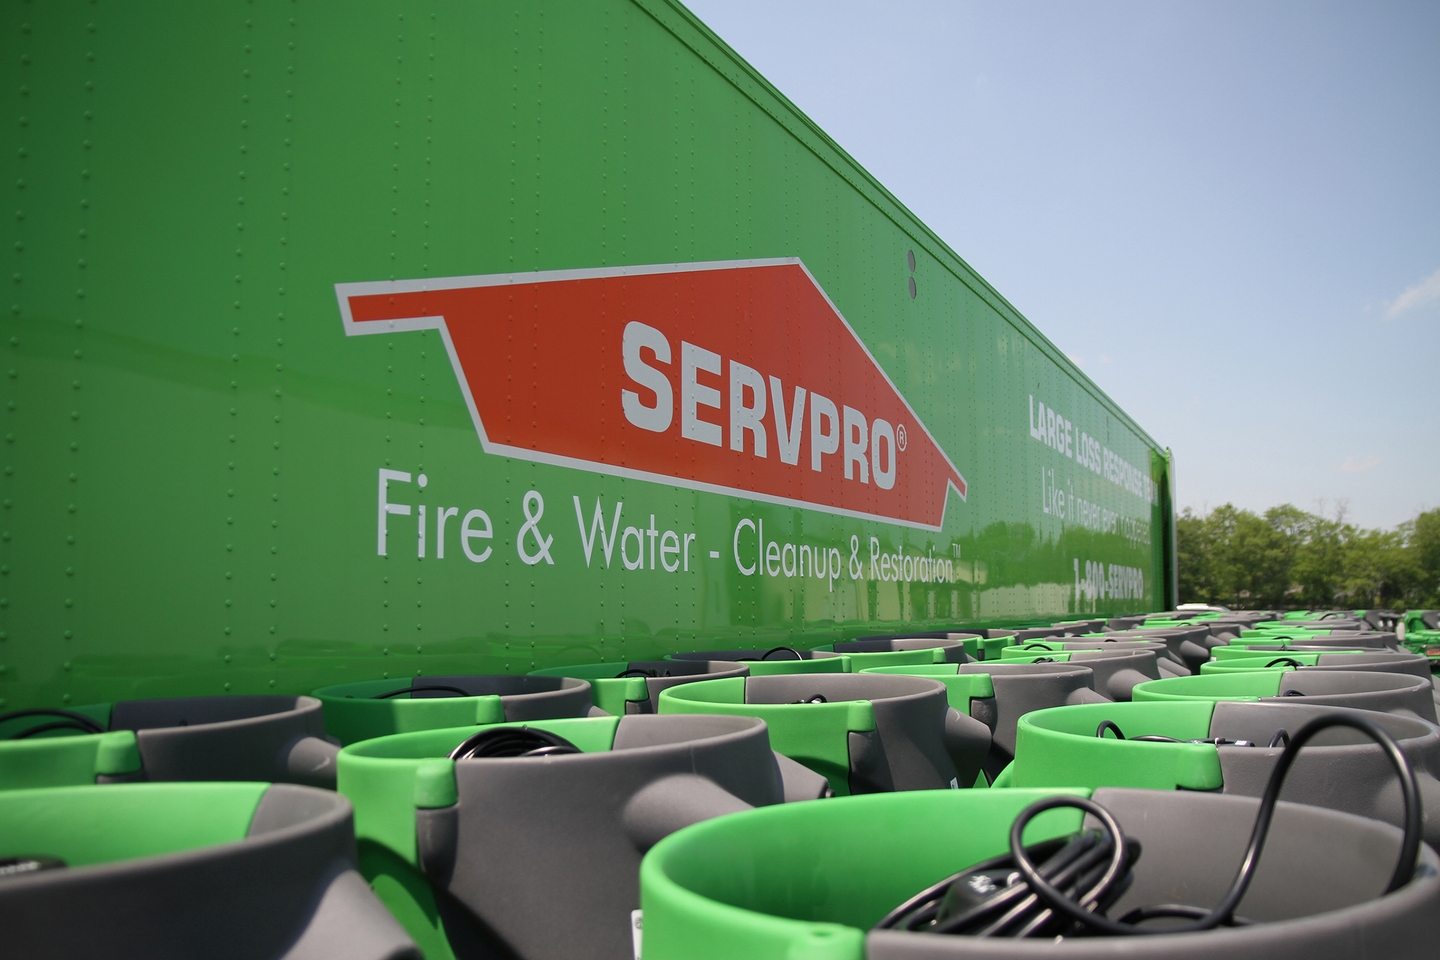 SERVPRO equipment next to semi-truck